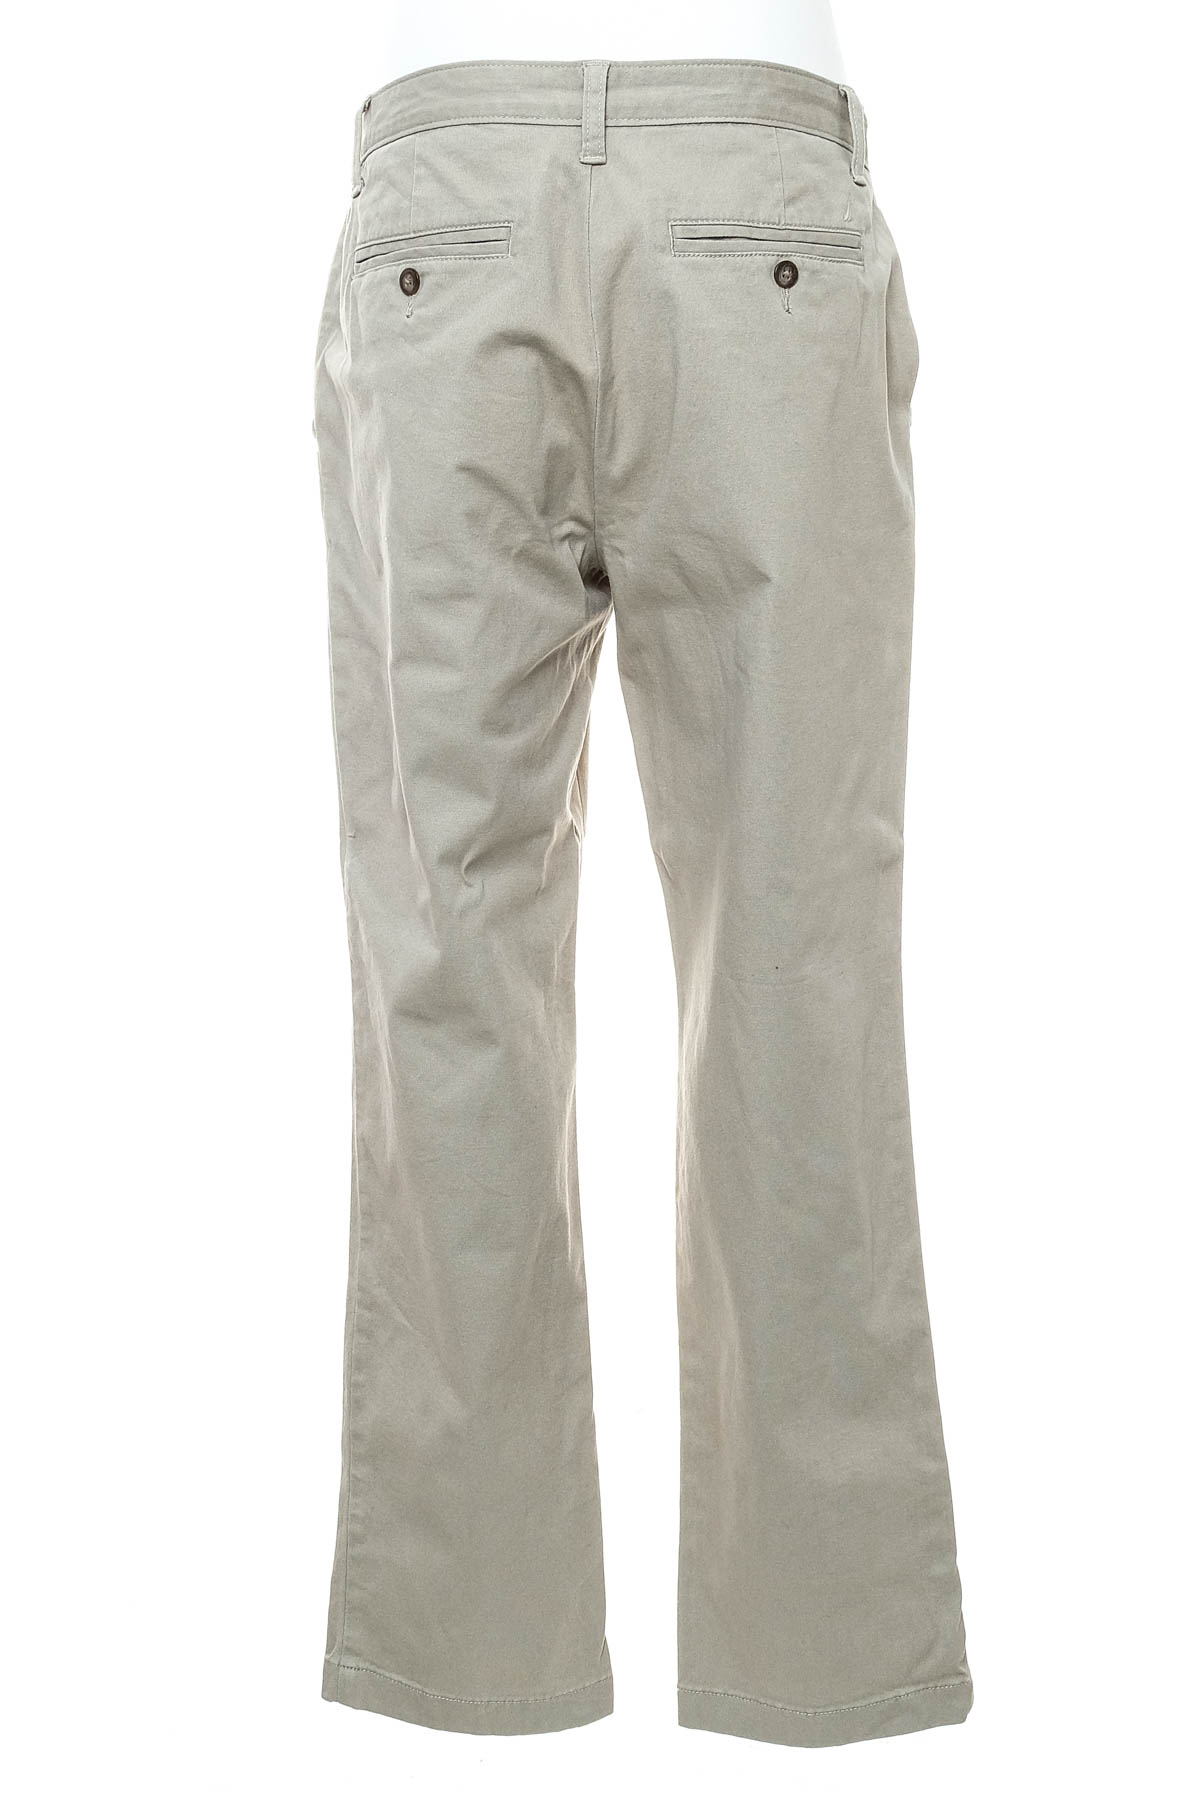 Men's trousers - Nautica - 1